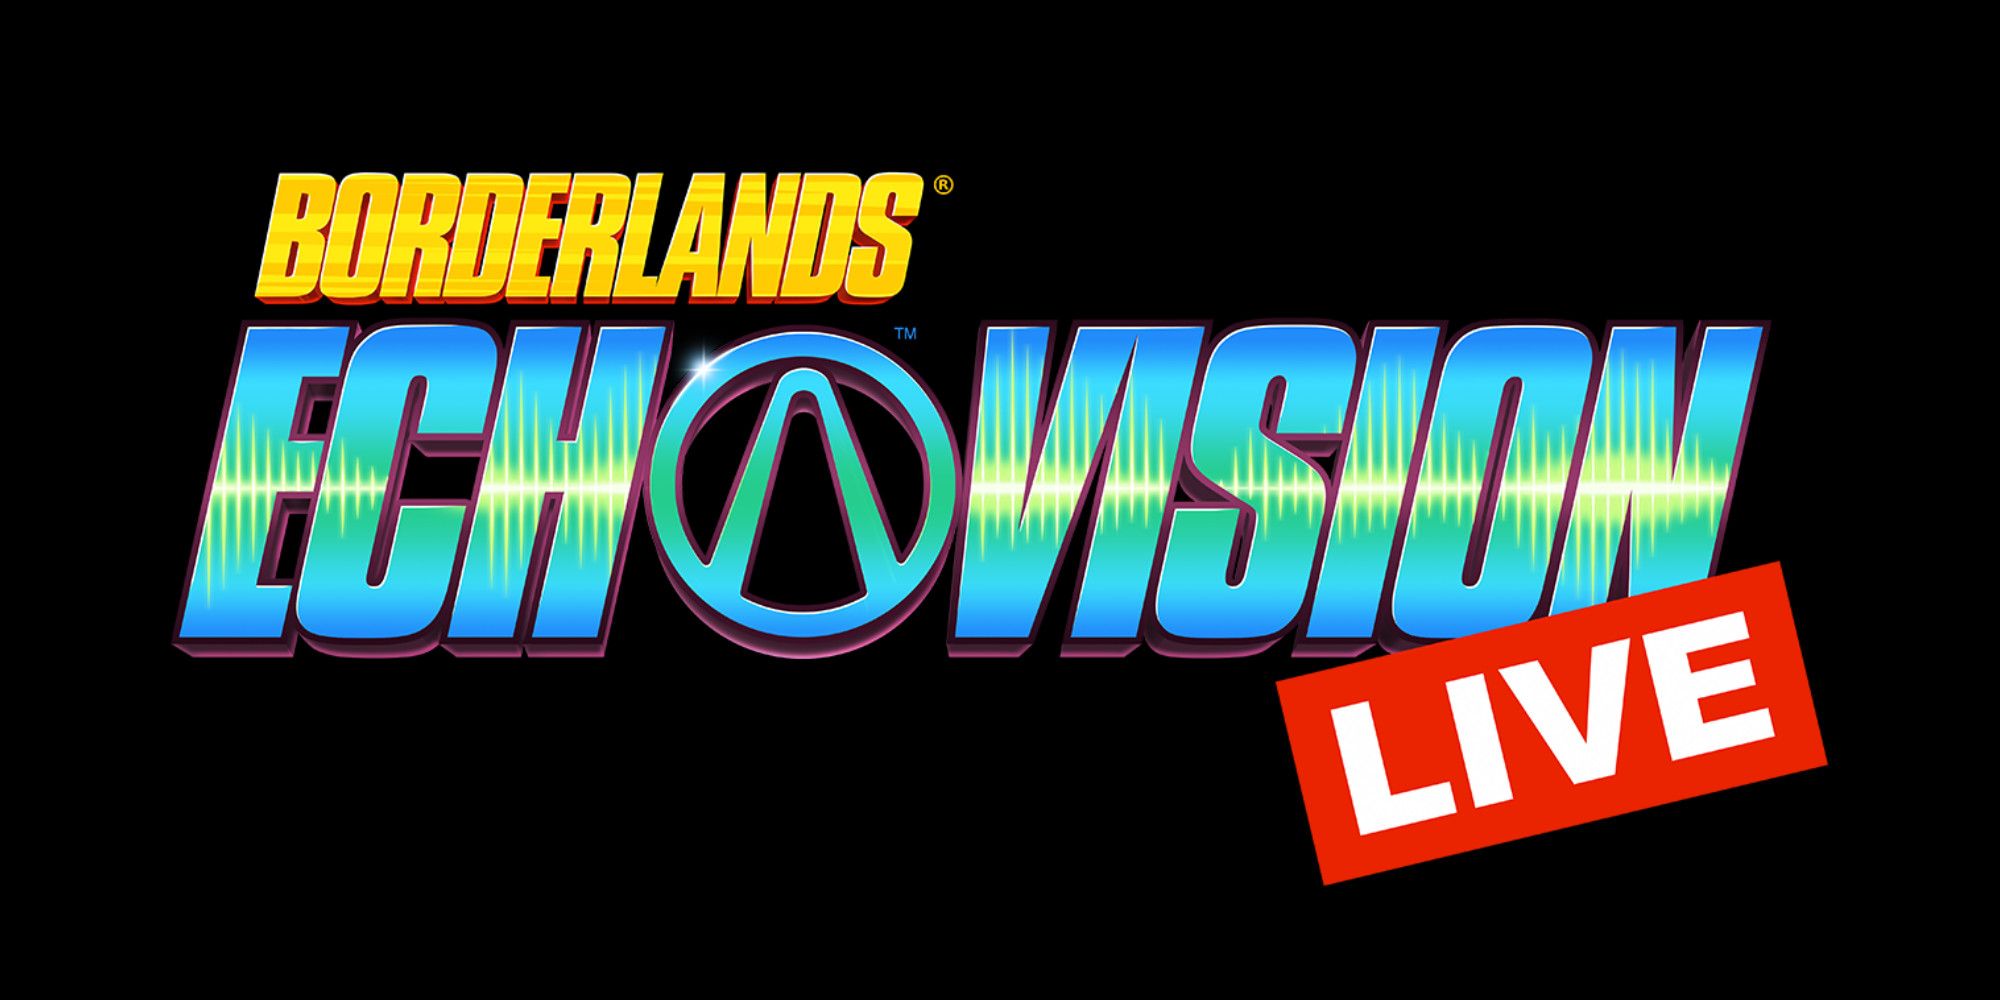 Borderlands EchoVision Live title screen